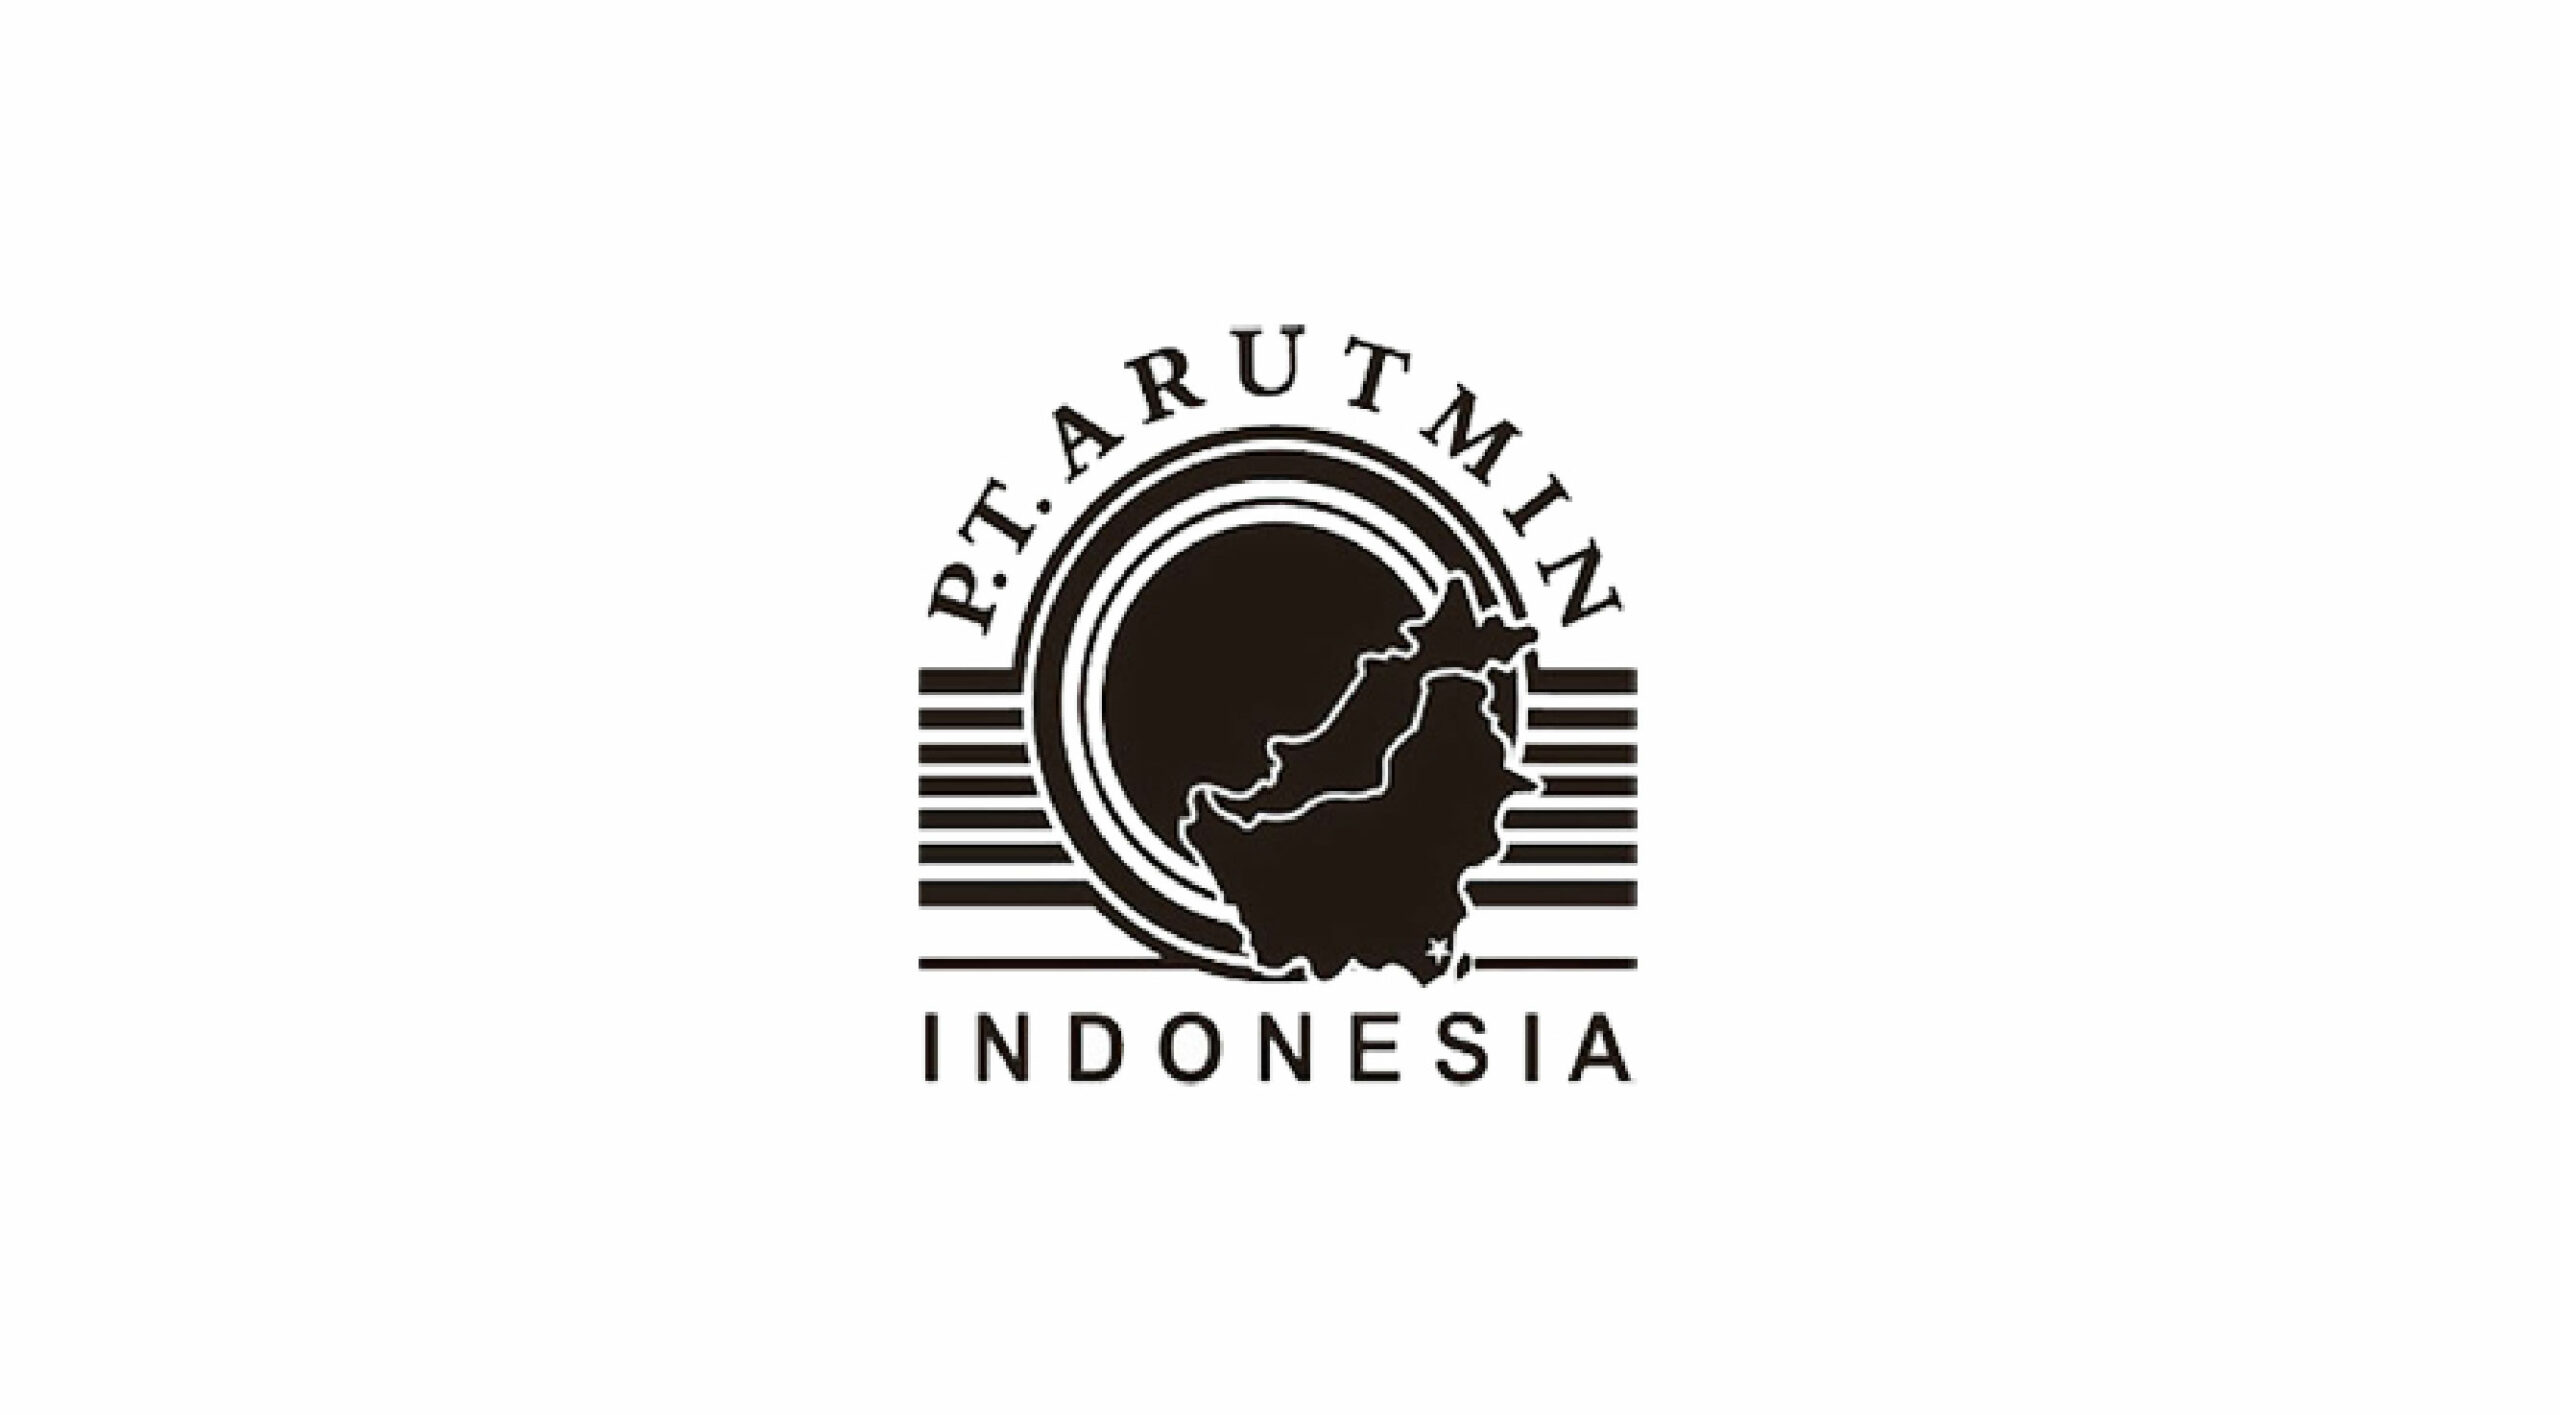 Lowongan Kerja PT Arutmin Indonesia